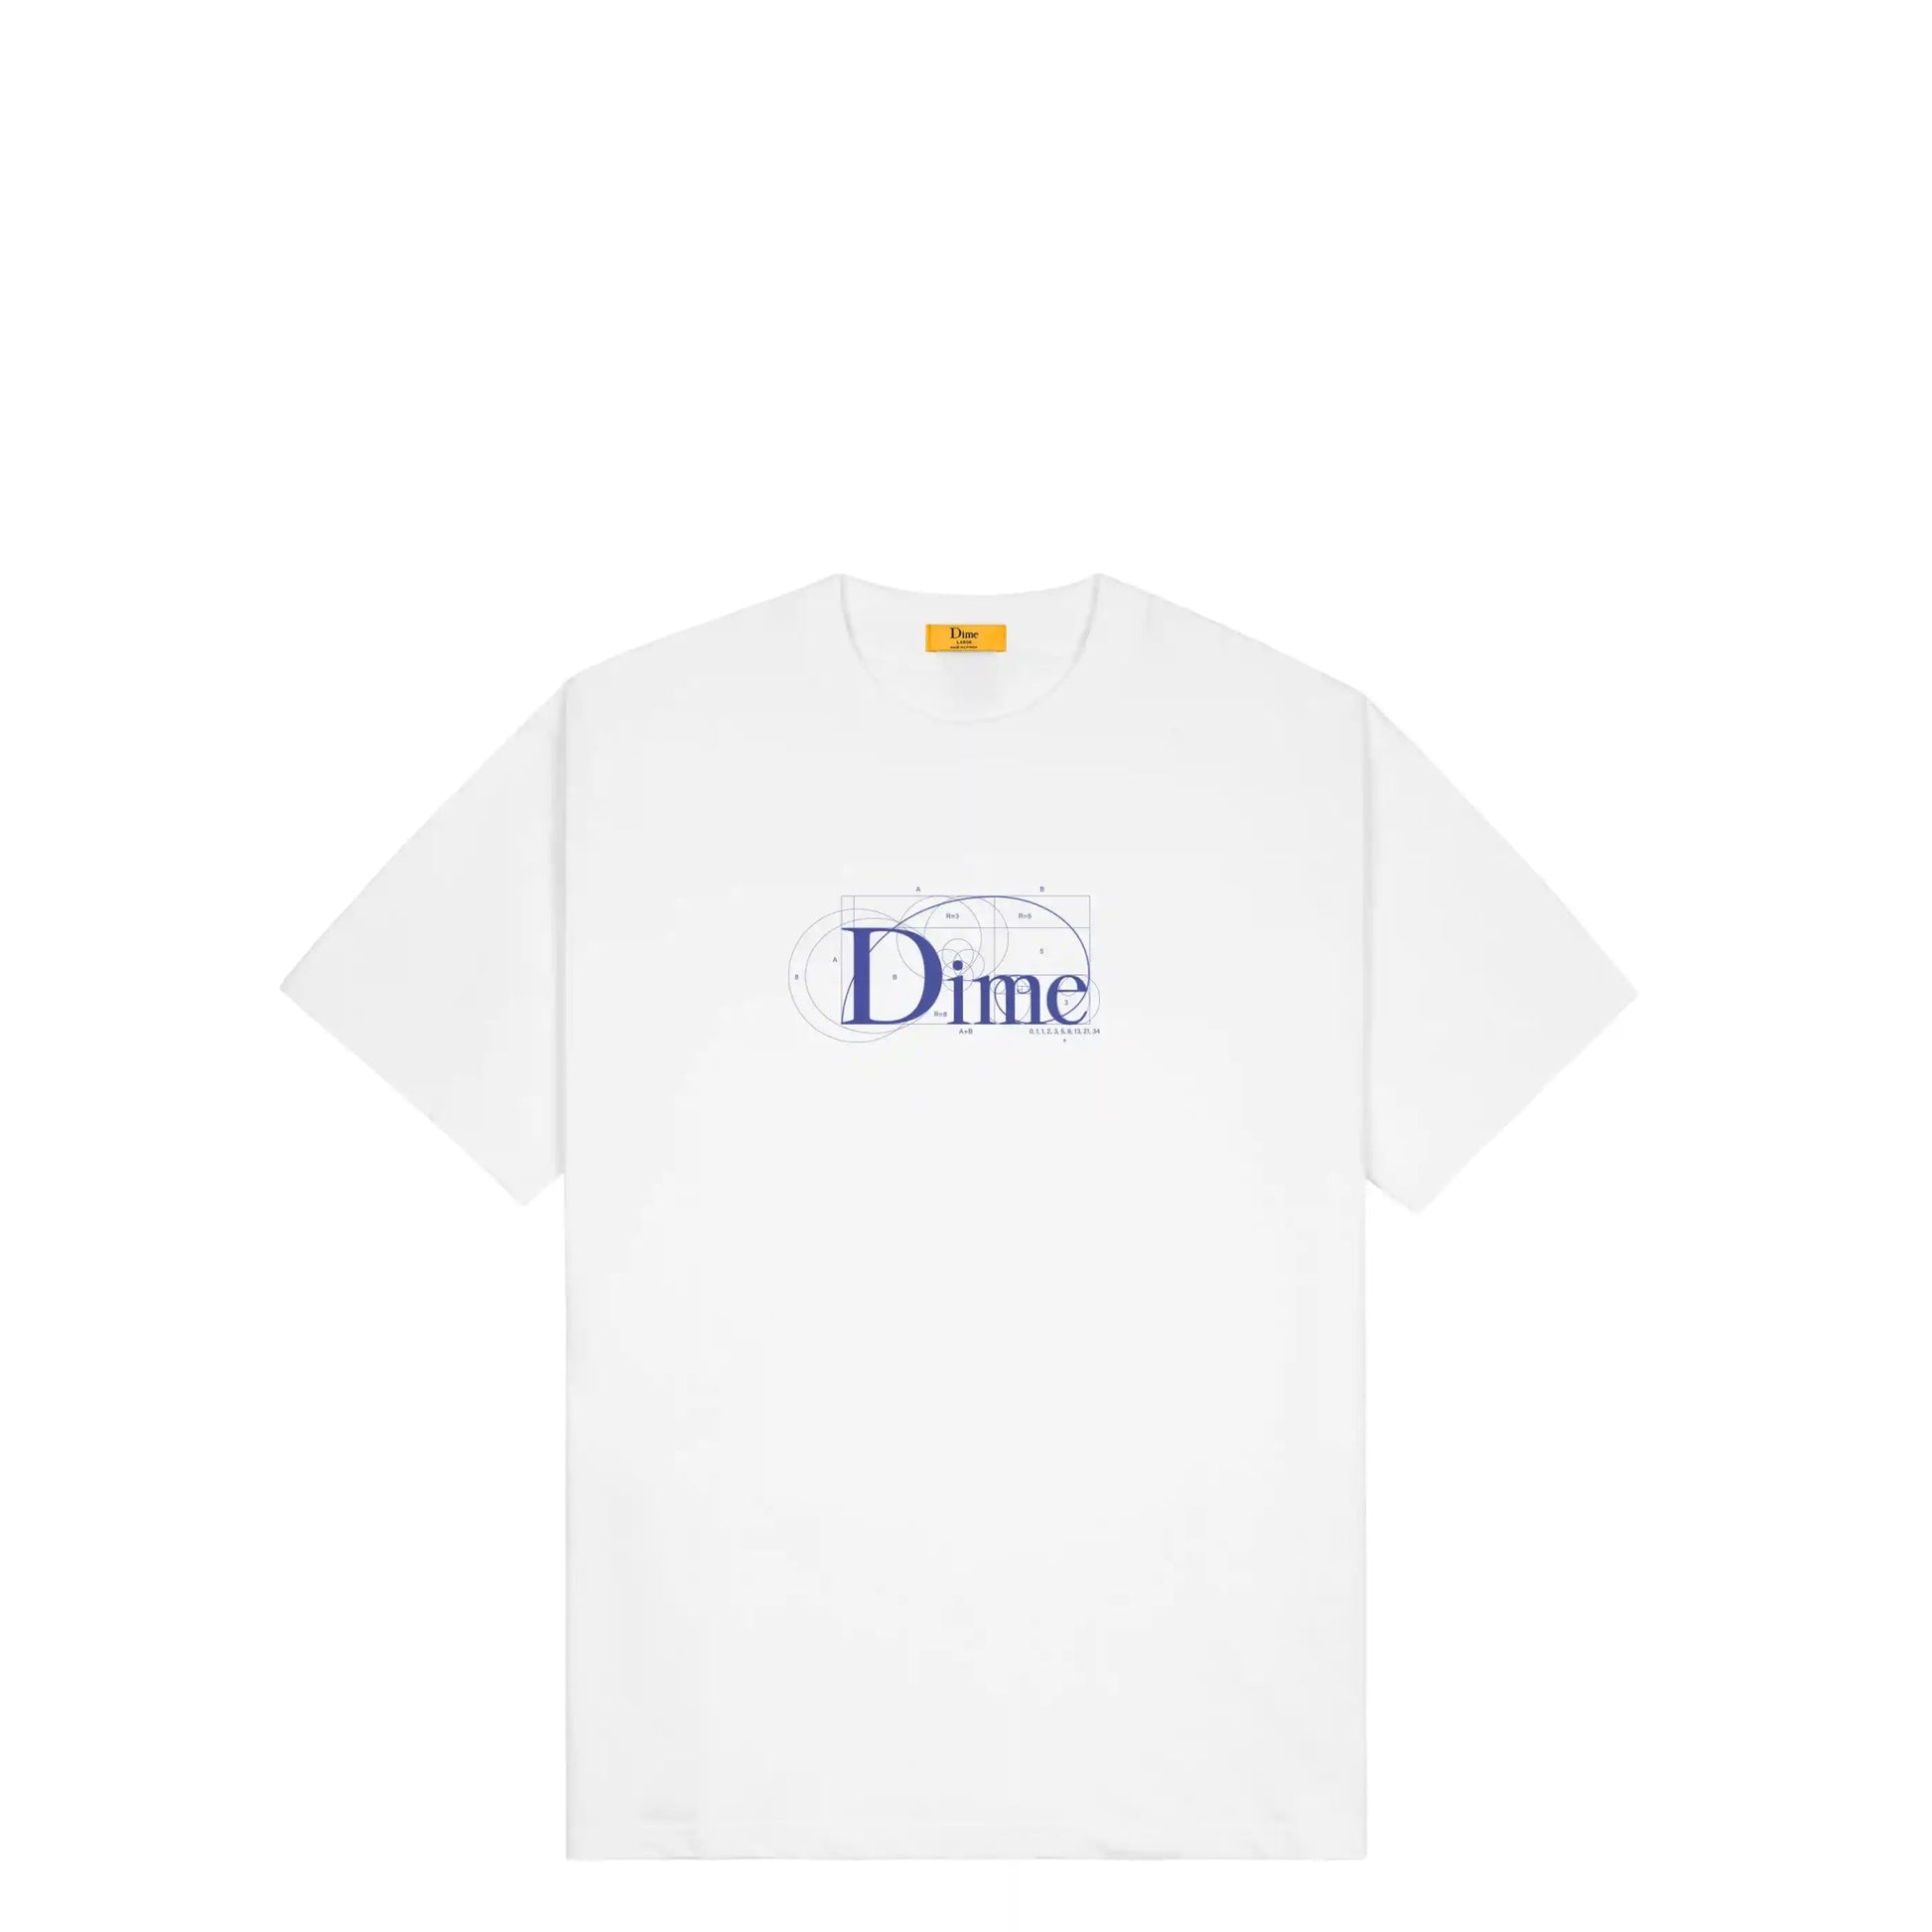 Dime Classic Ratio T-Shirt, white - Tiki Room Skateboards - 1